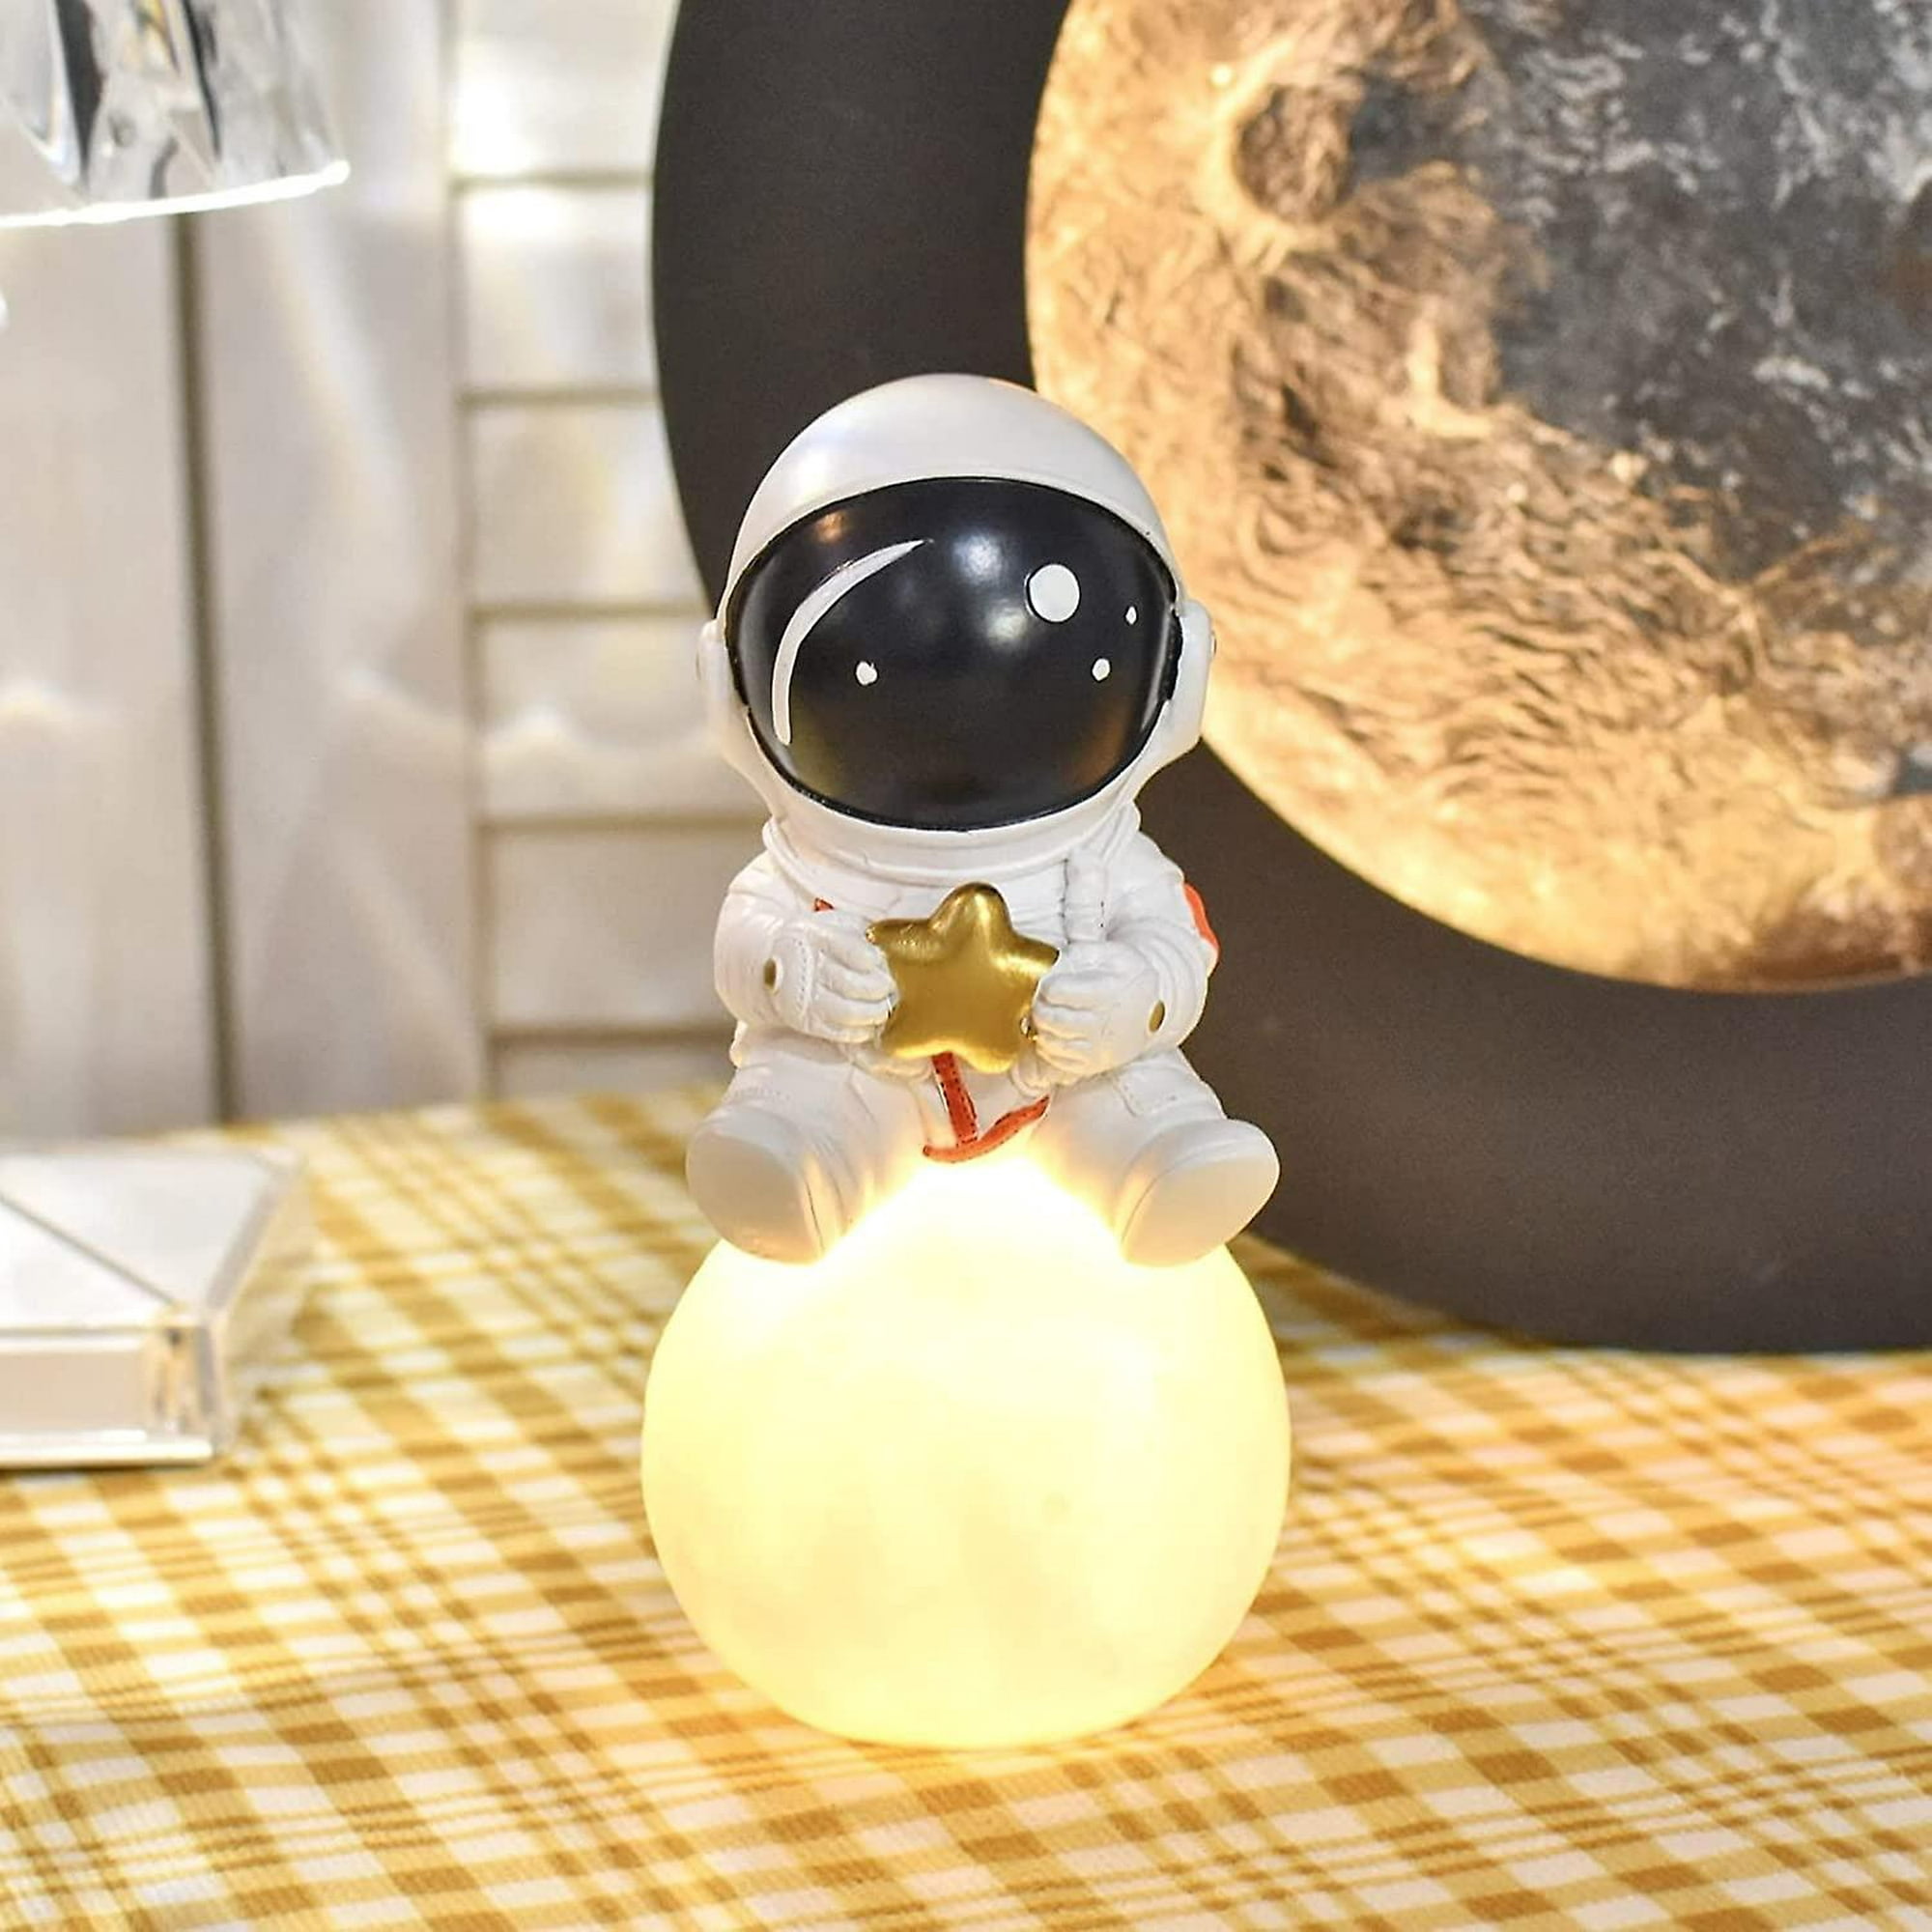 Casco de astronauta de juguete blanco de tela suave para niños